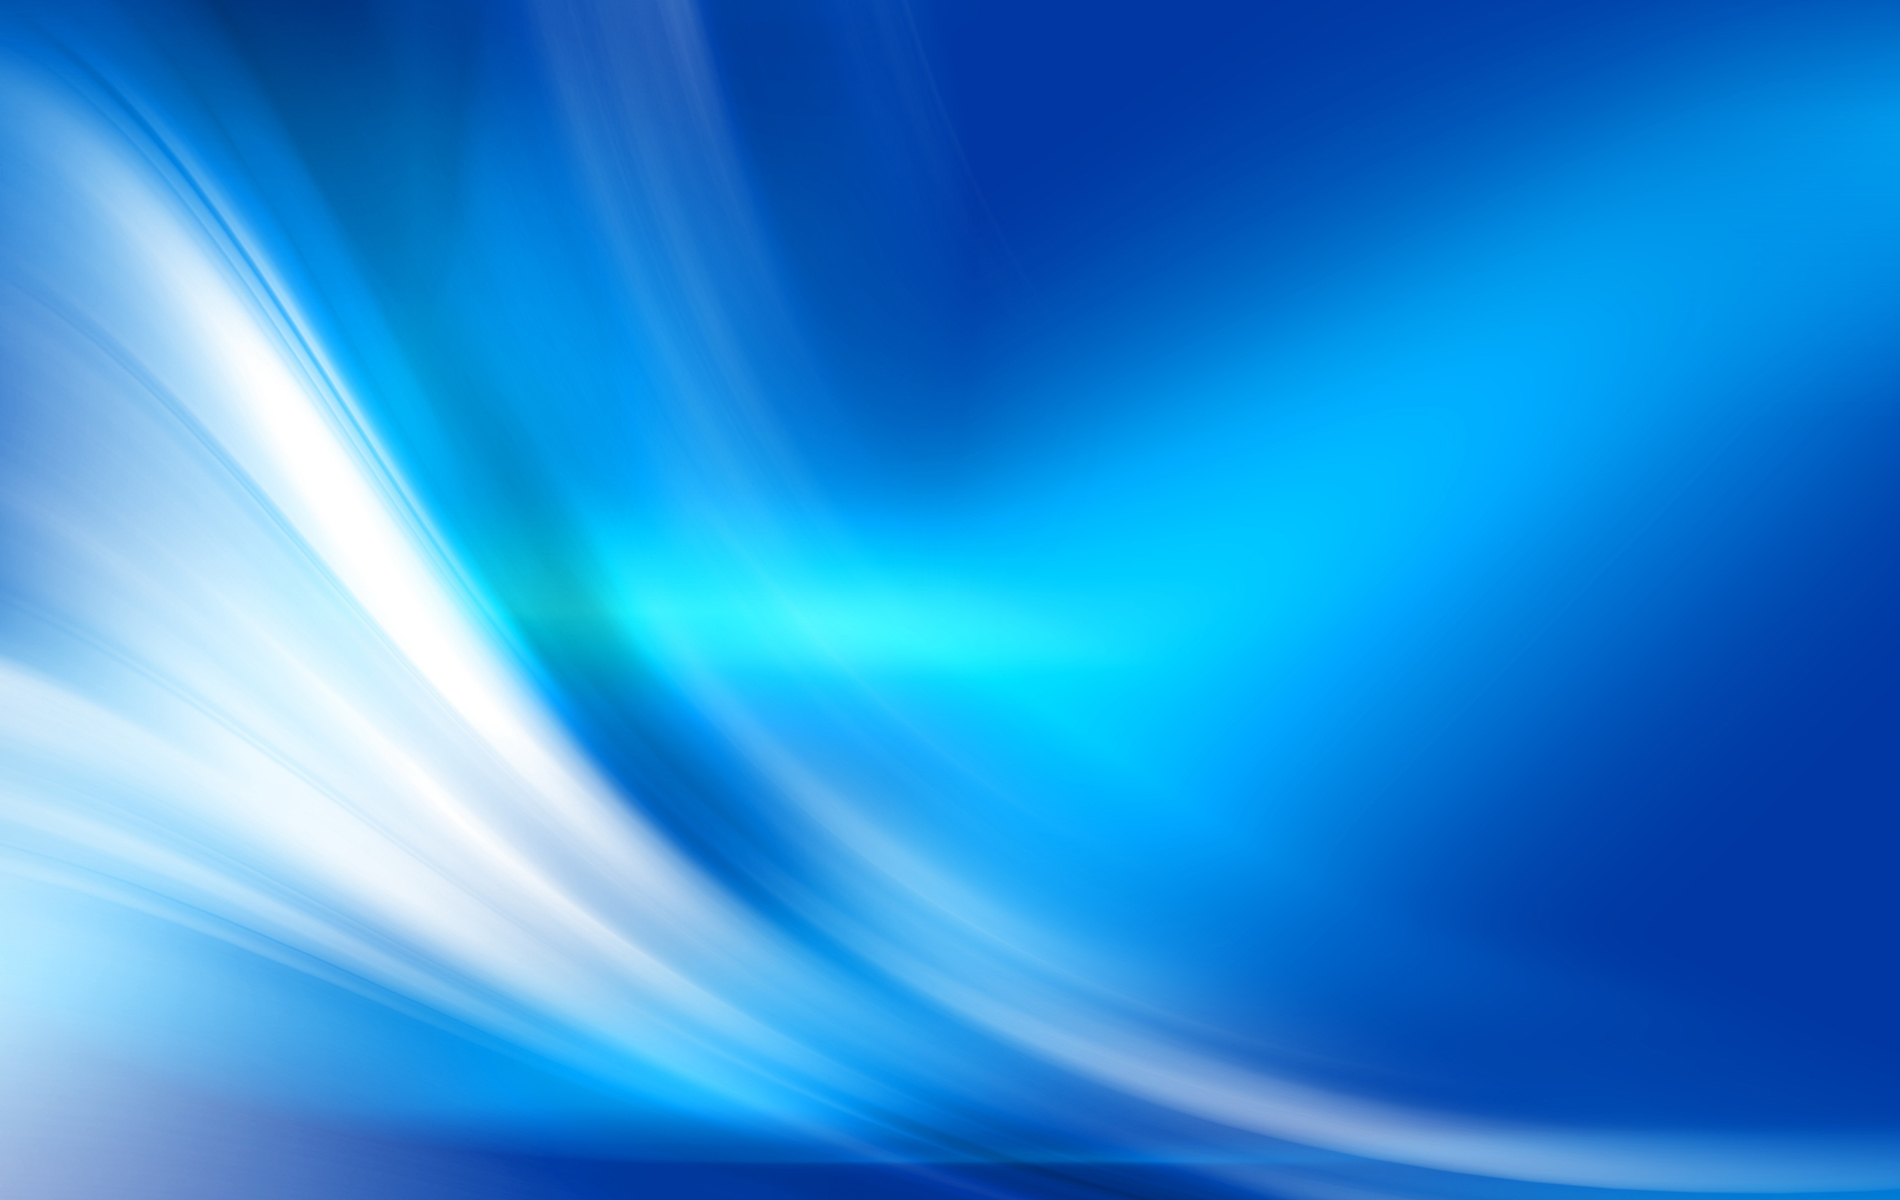  Download Windows 10 Desktop Background In 1920x1200 With Blue 1900x1200